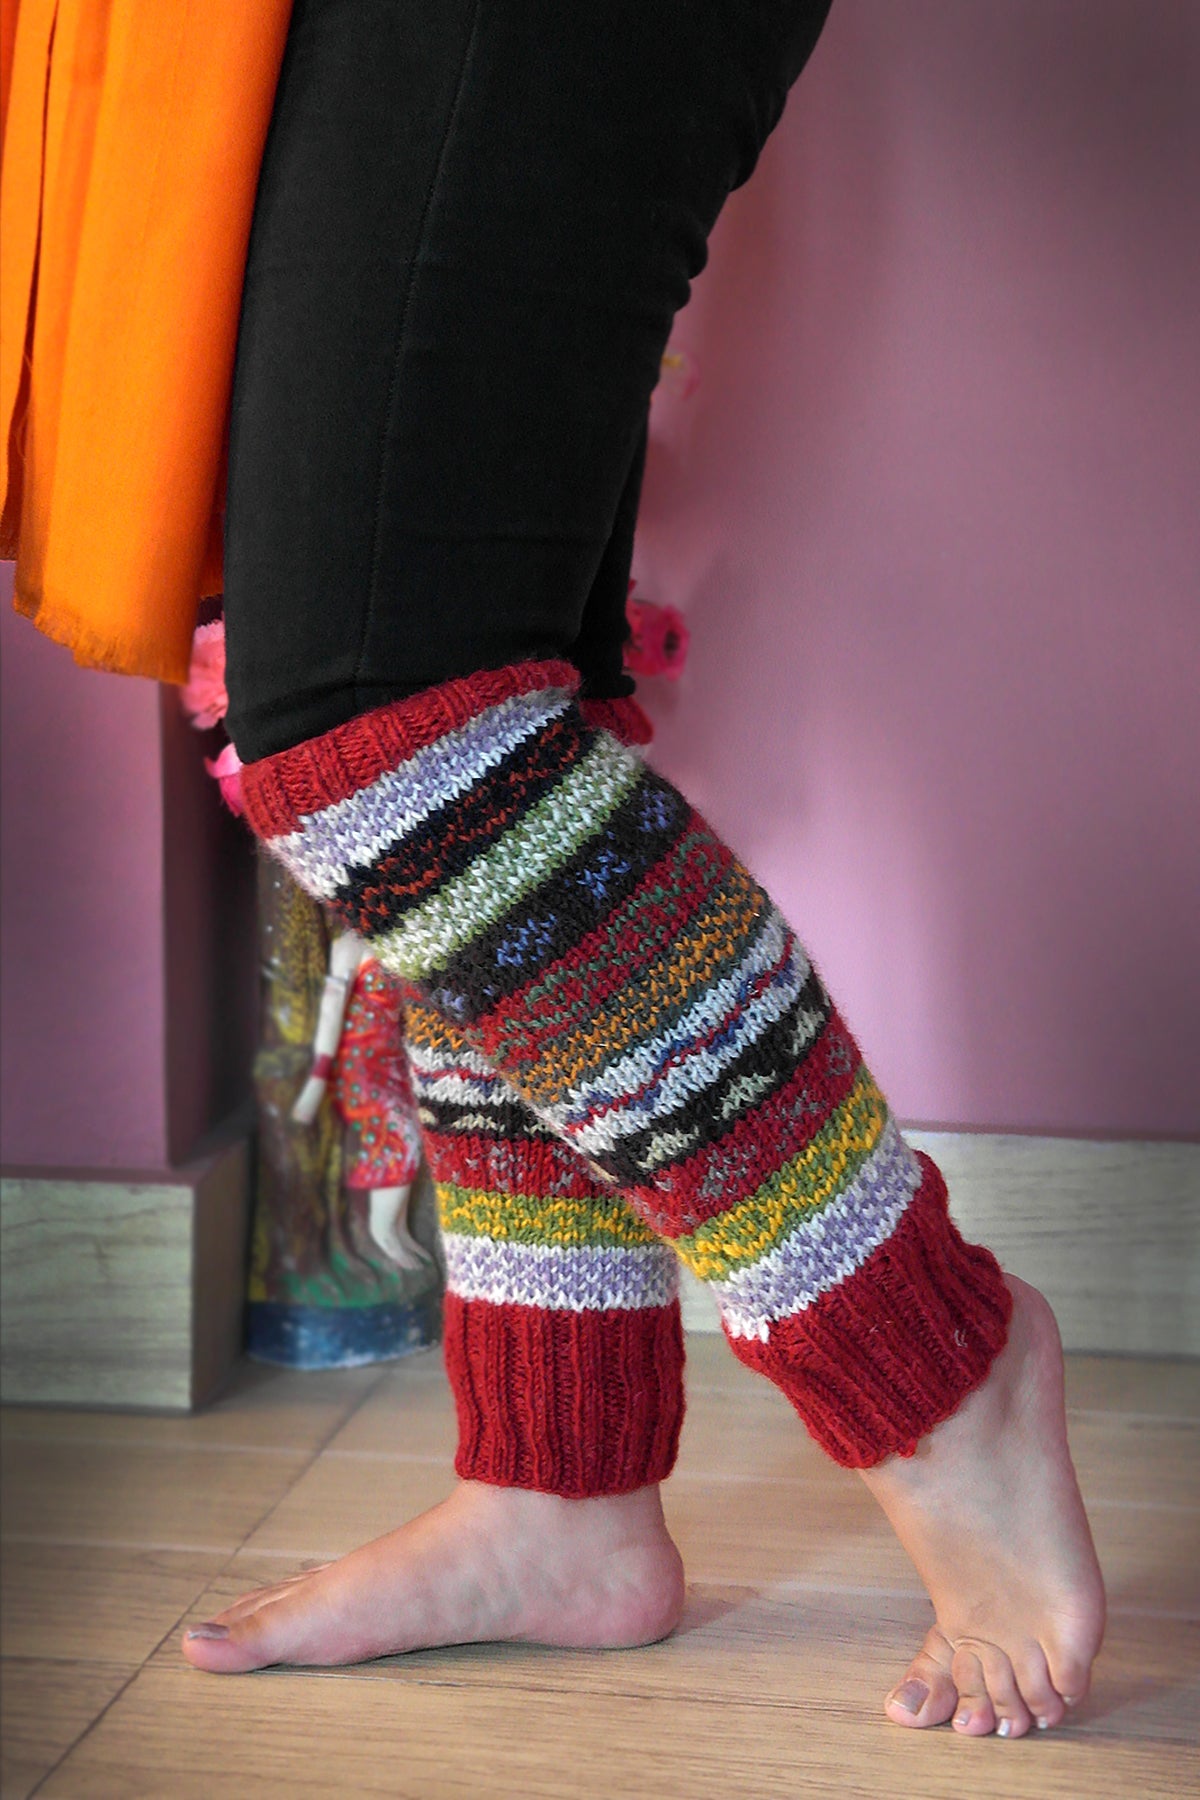 Soft Kora Shola yak wool leggings keep legs toasty